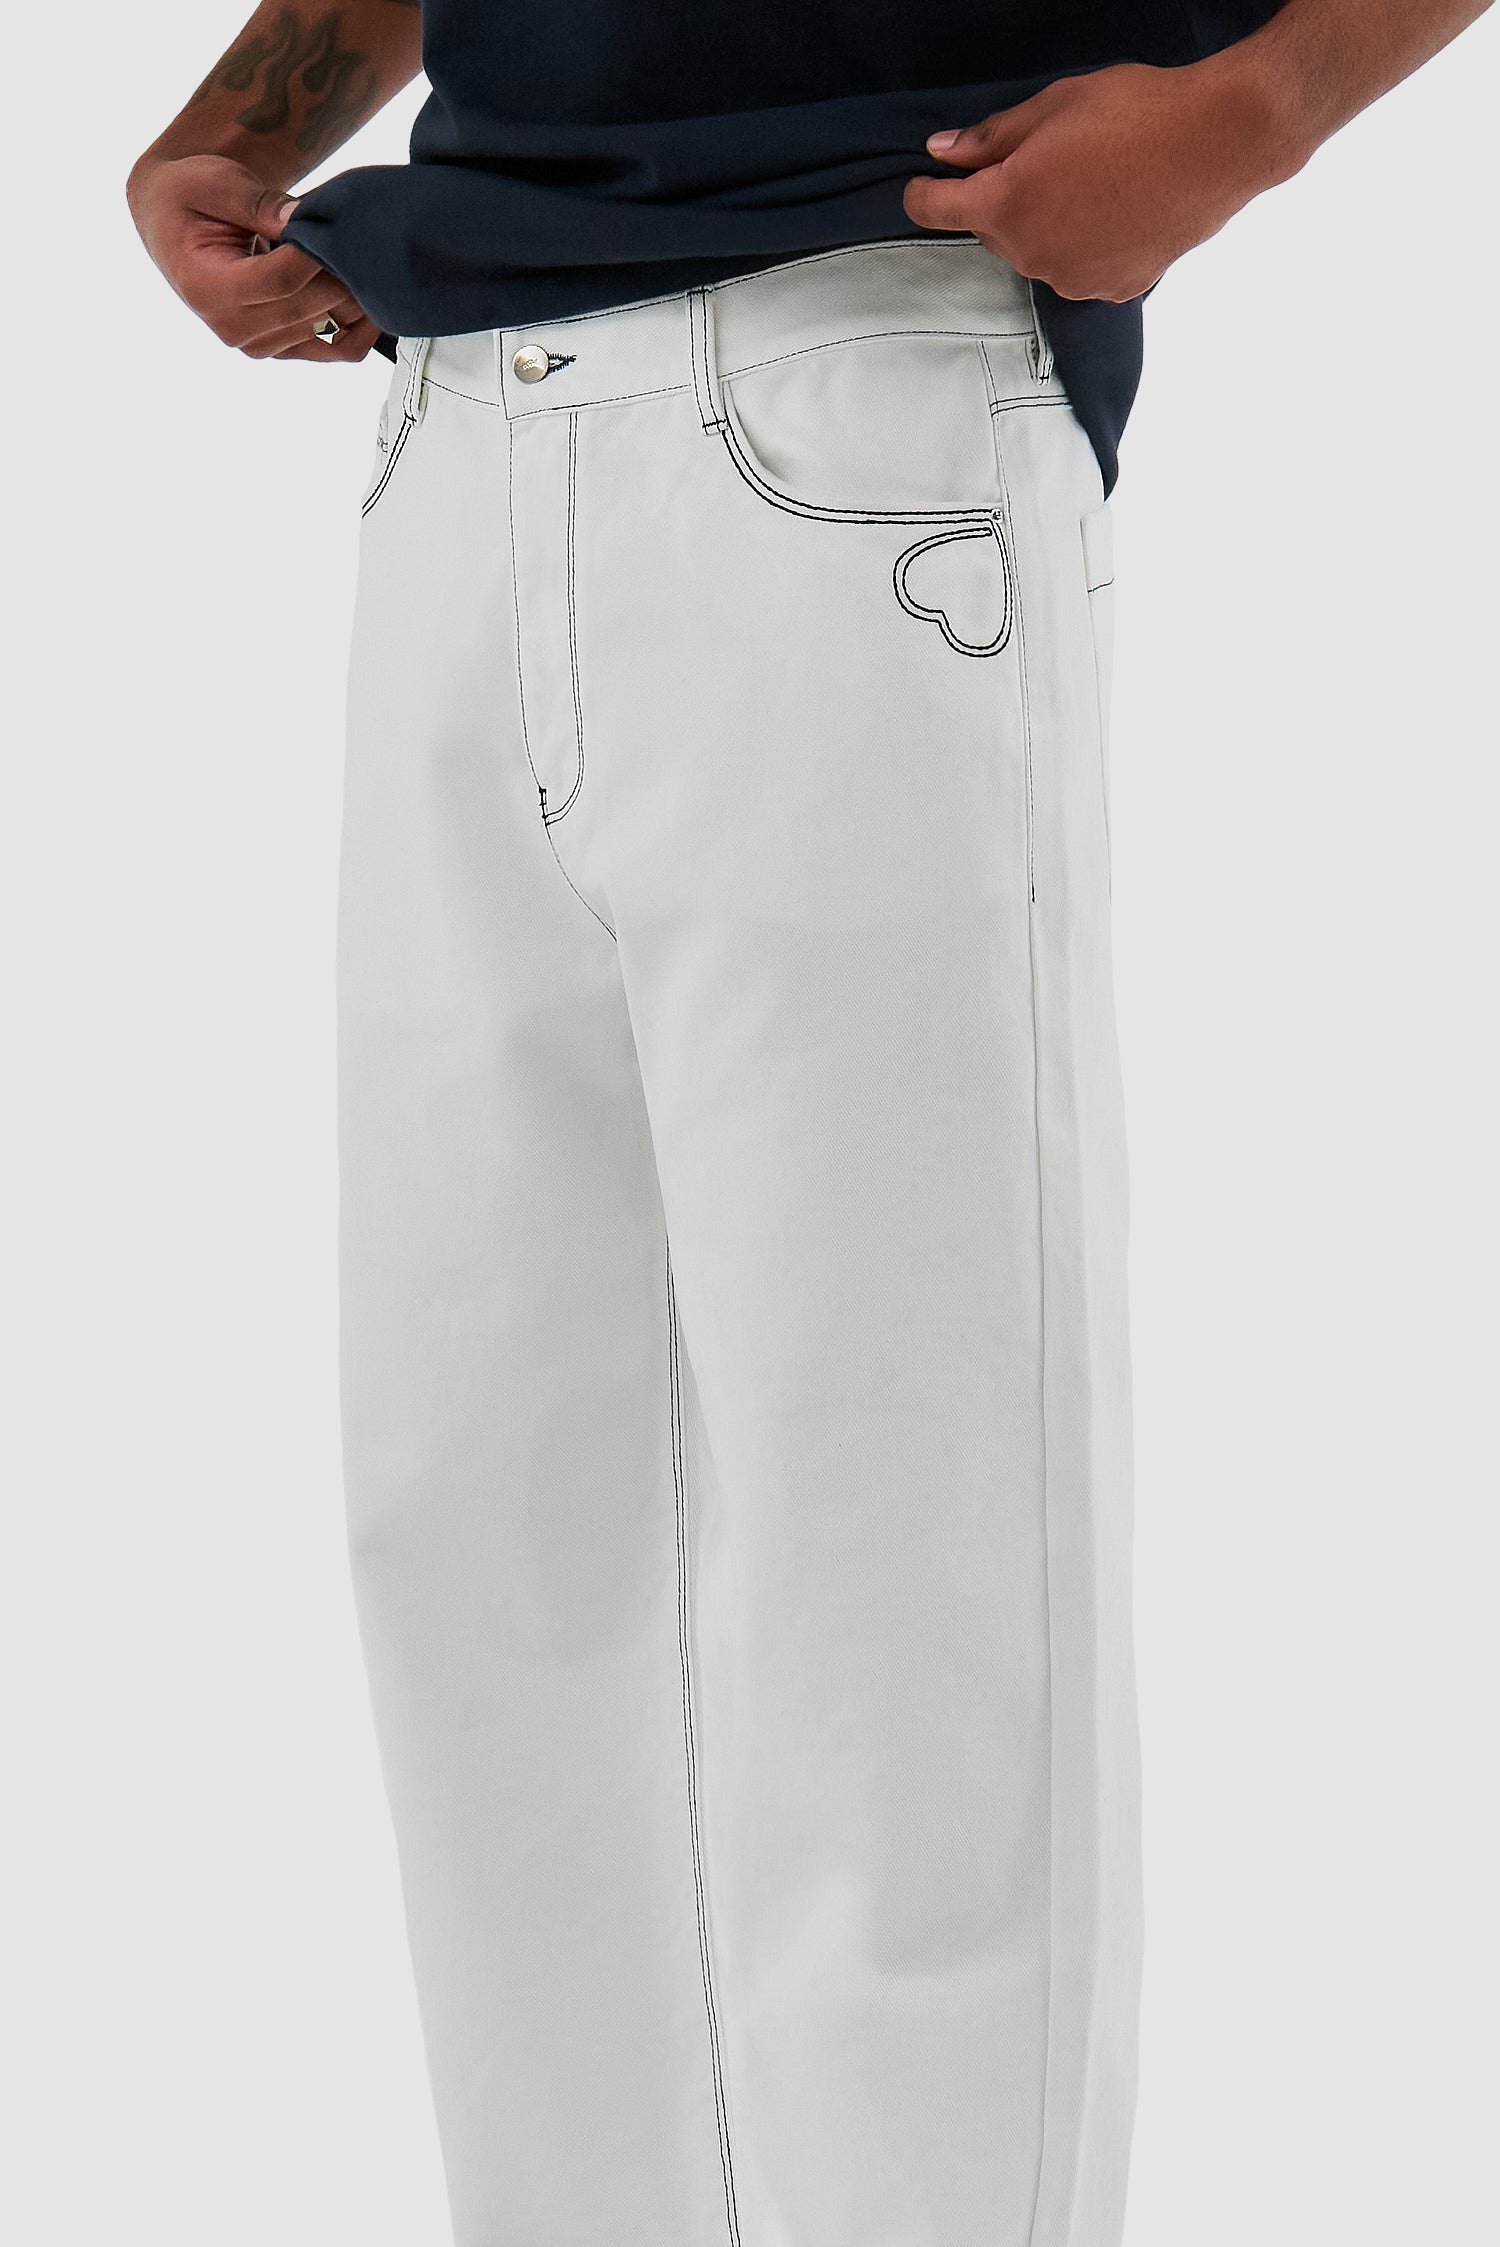 Poage Heart Detail Pants - White